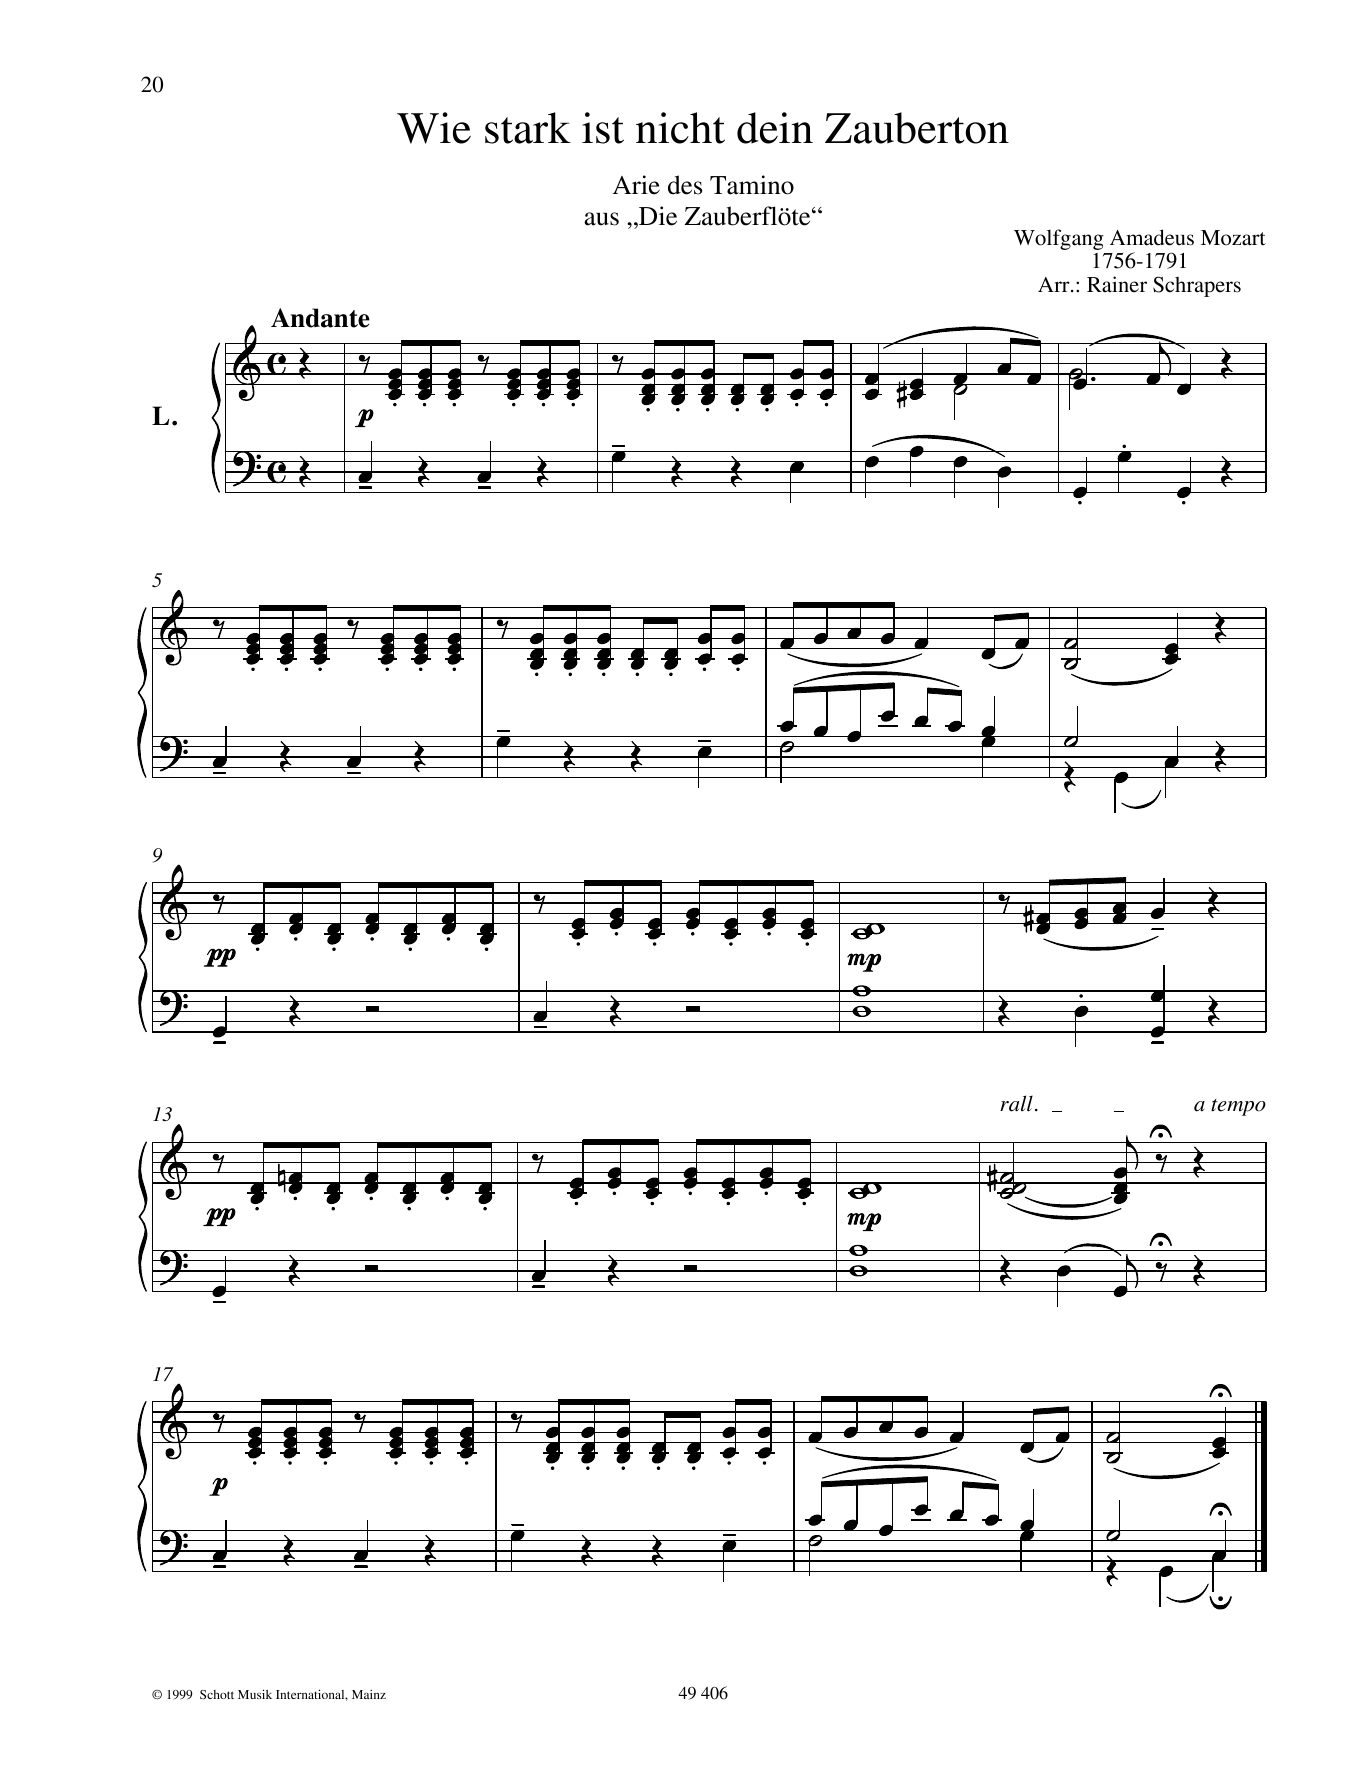 Wolfgang Amadeus Mozart Wie stark ist nicht dein Zauberton Sheet Music Notes & Chords for Piano Duet - Download or Print PDF